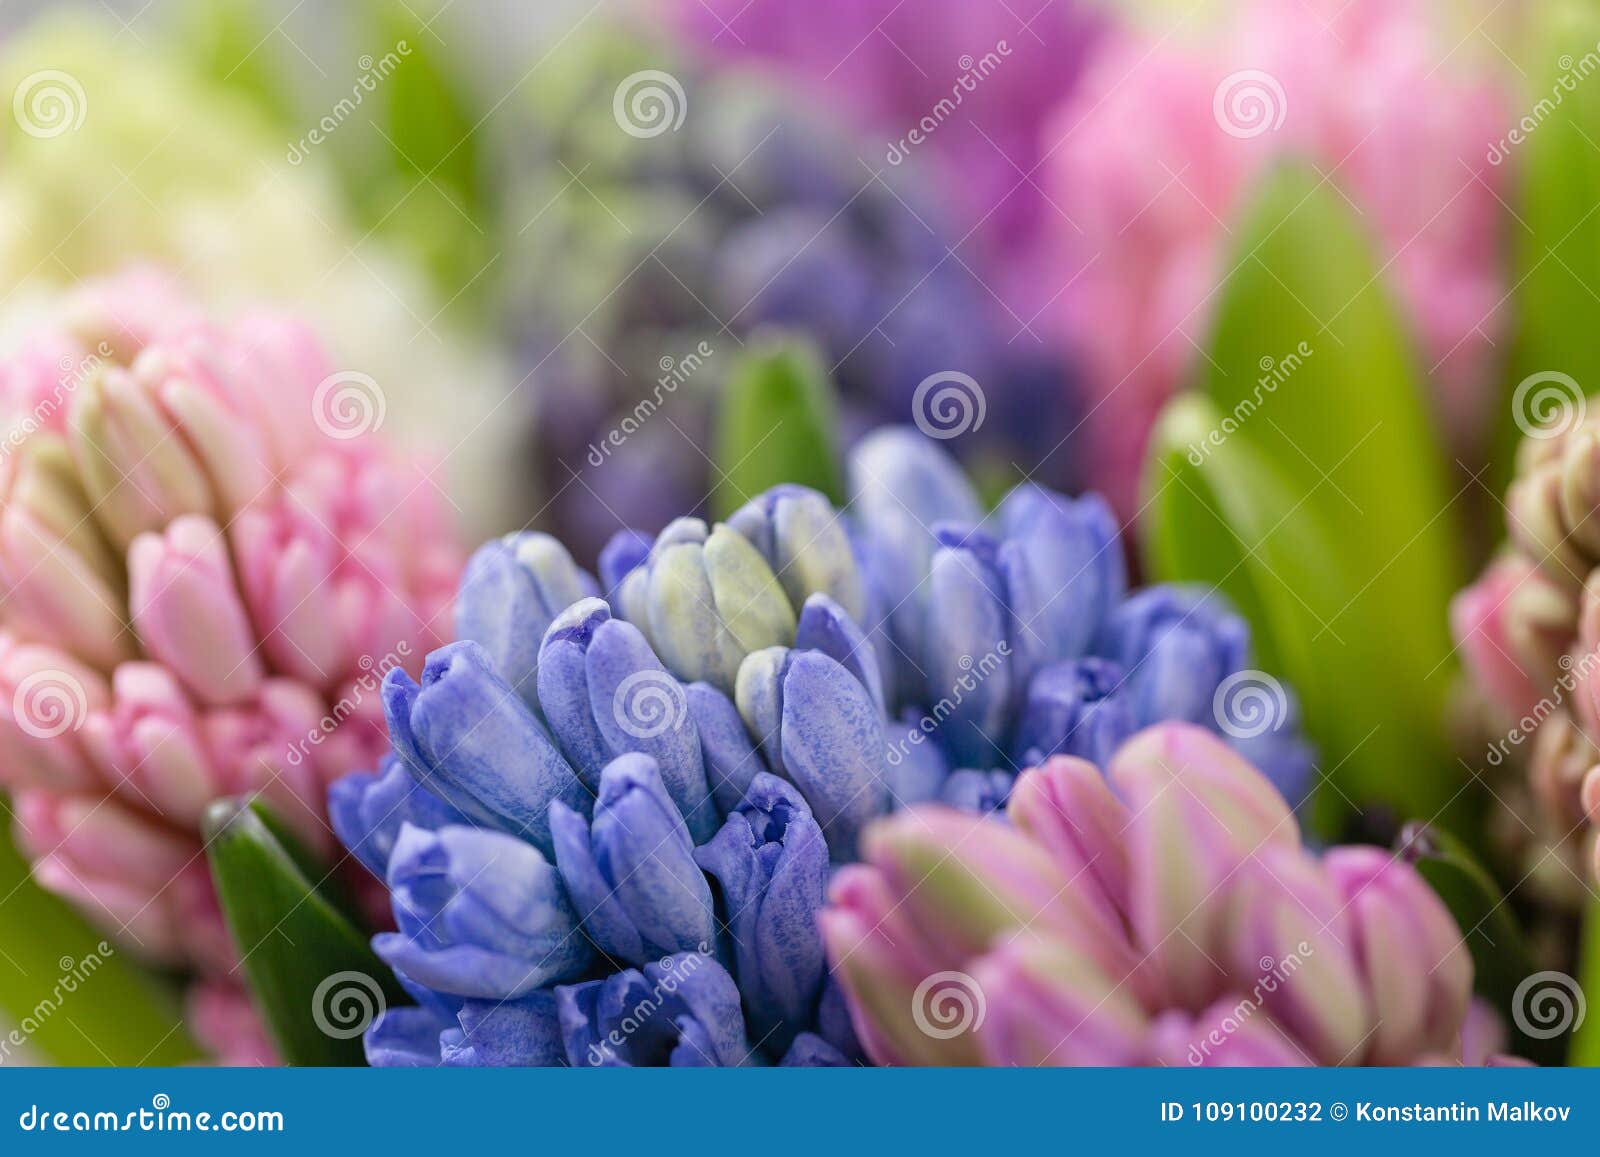 Hyacinth Closeup Flower Shop Concept Mixed Color Fresh Spring